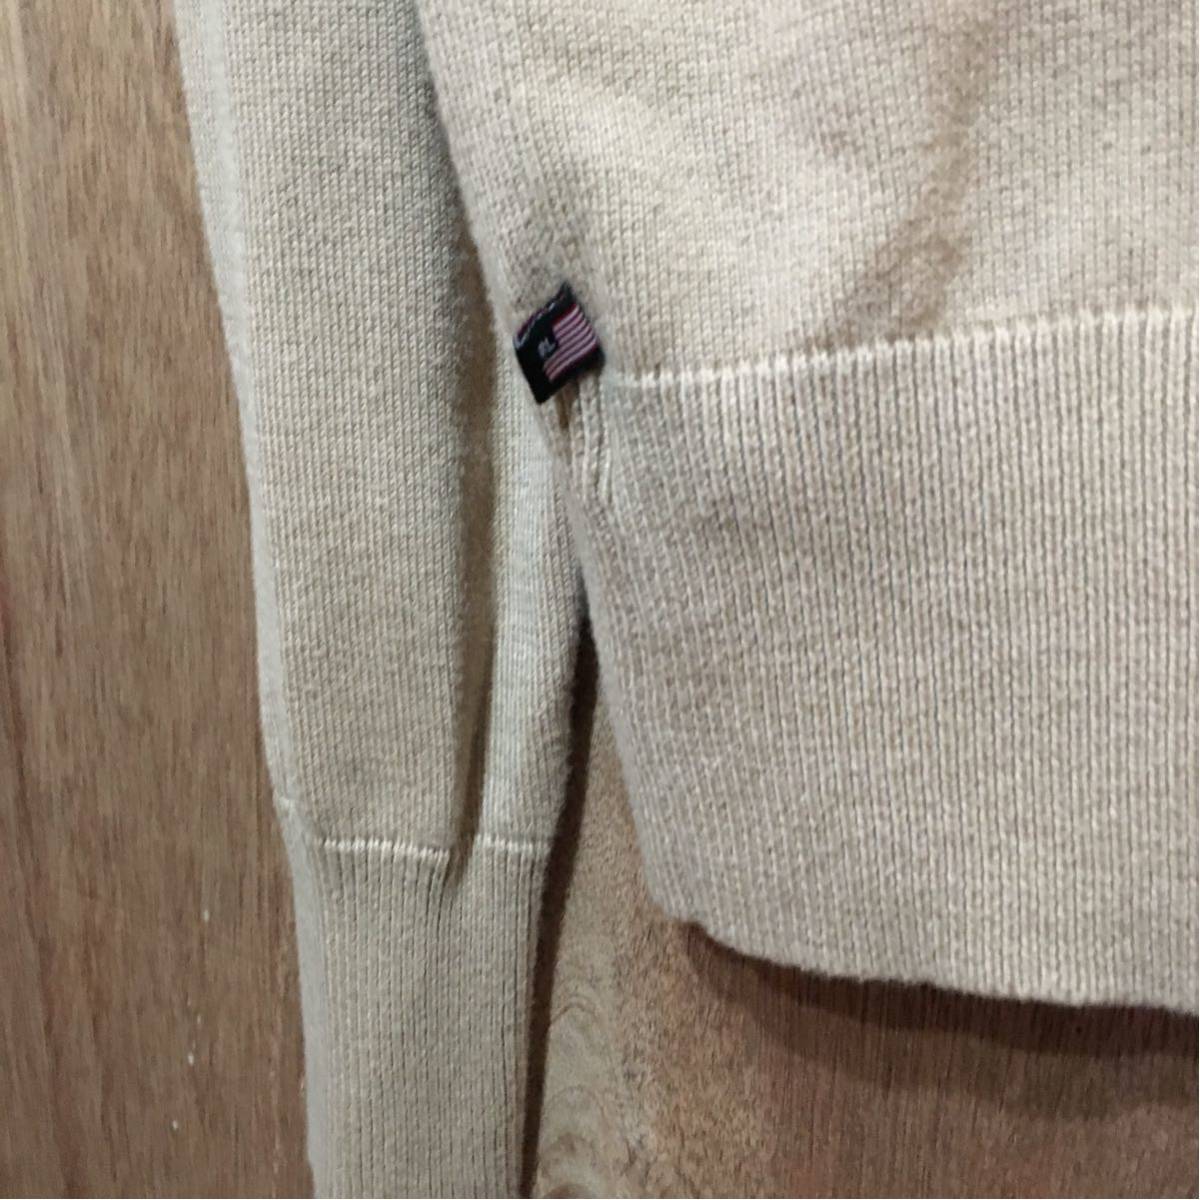 Polo Jeans Polo джинсы Ralph Lauren свитер cut and sewn звезда статья флаг a-ga il б/у одежда 